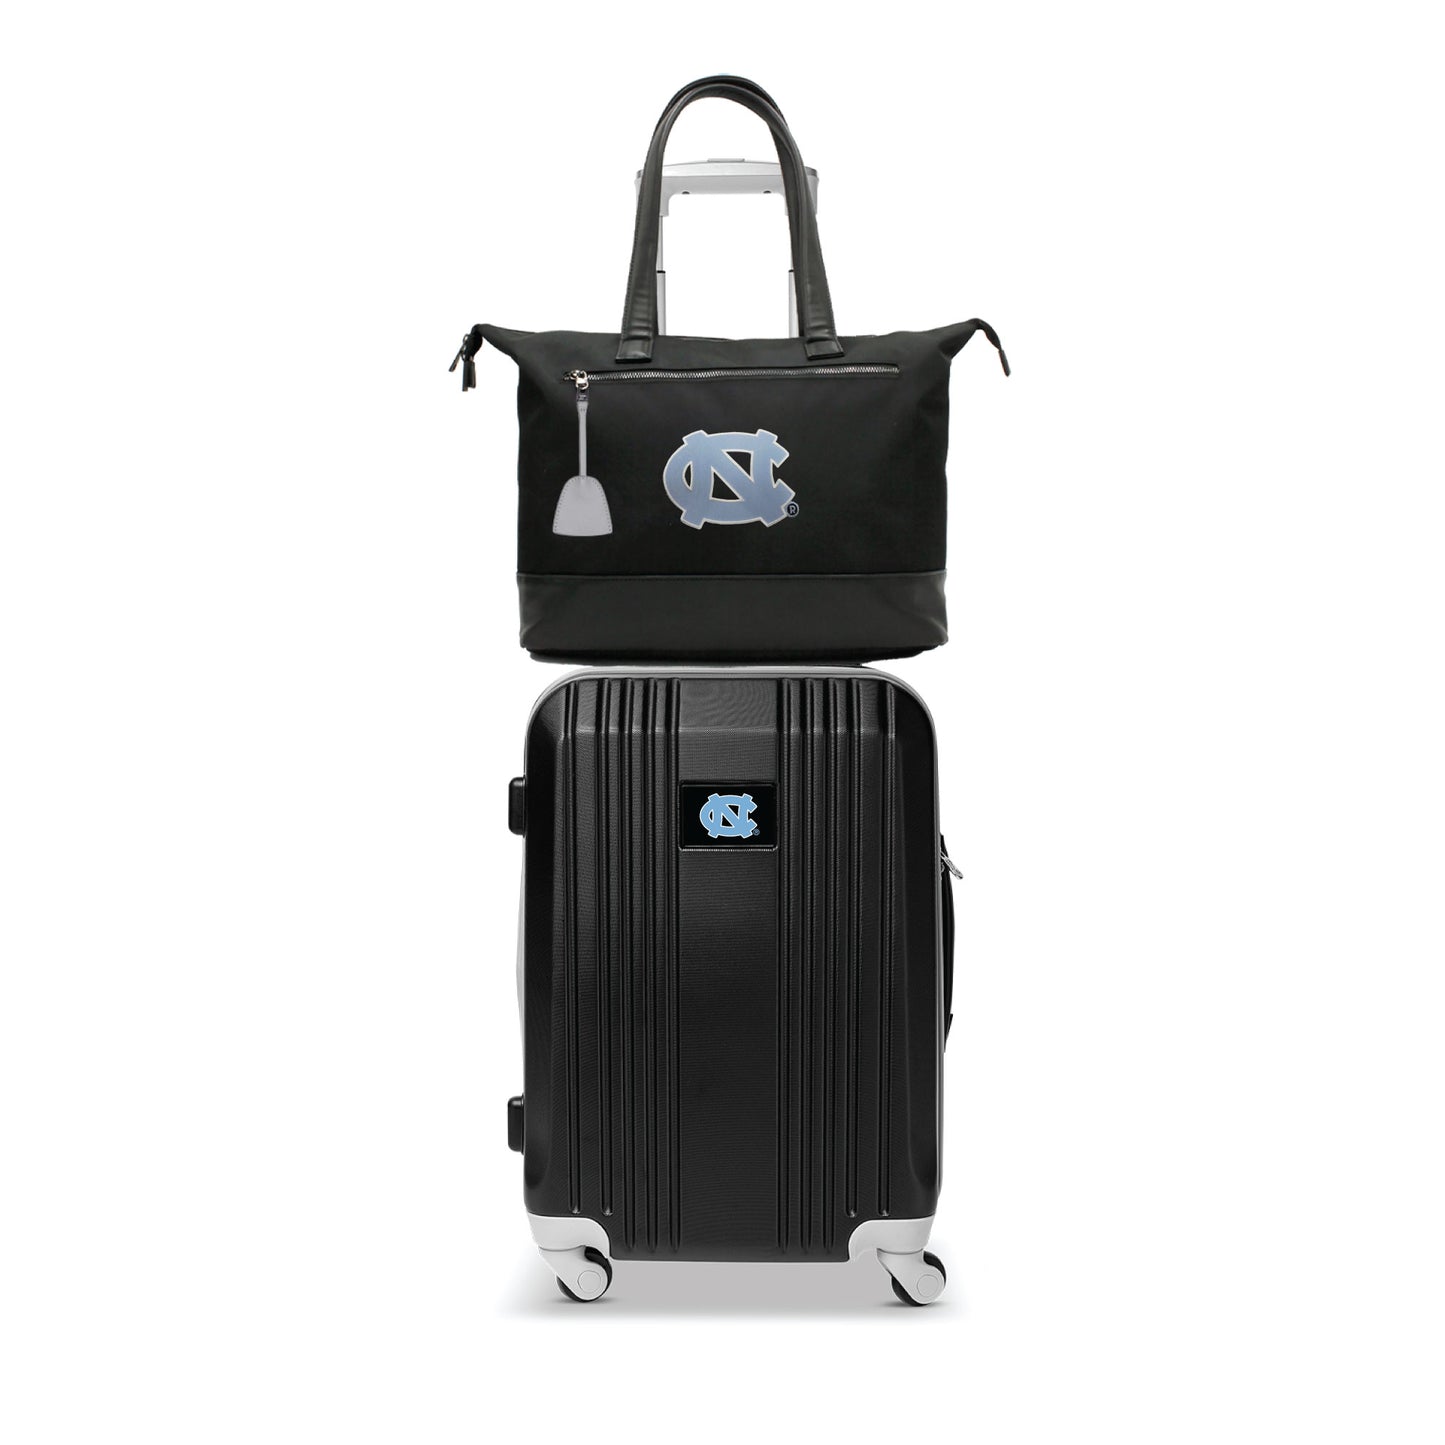 UNC Tar Heels Premium Laptop Tote Bag and Luggage Set